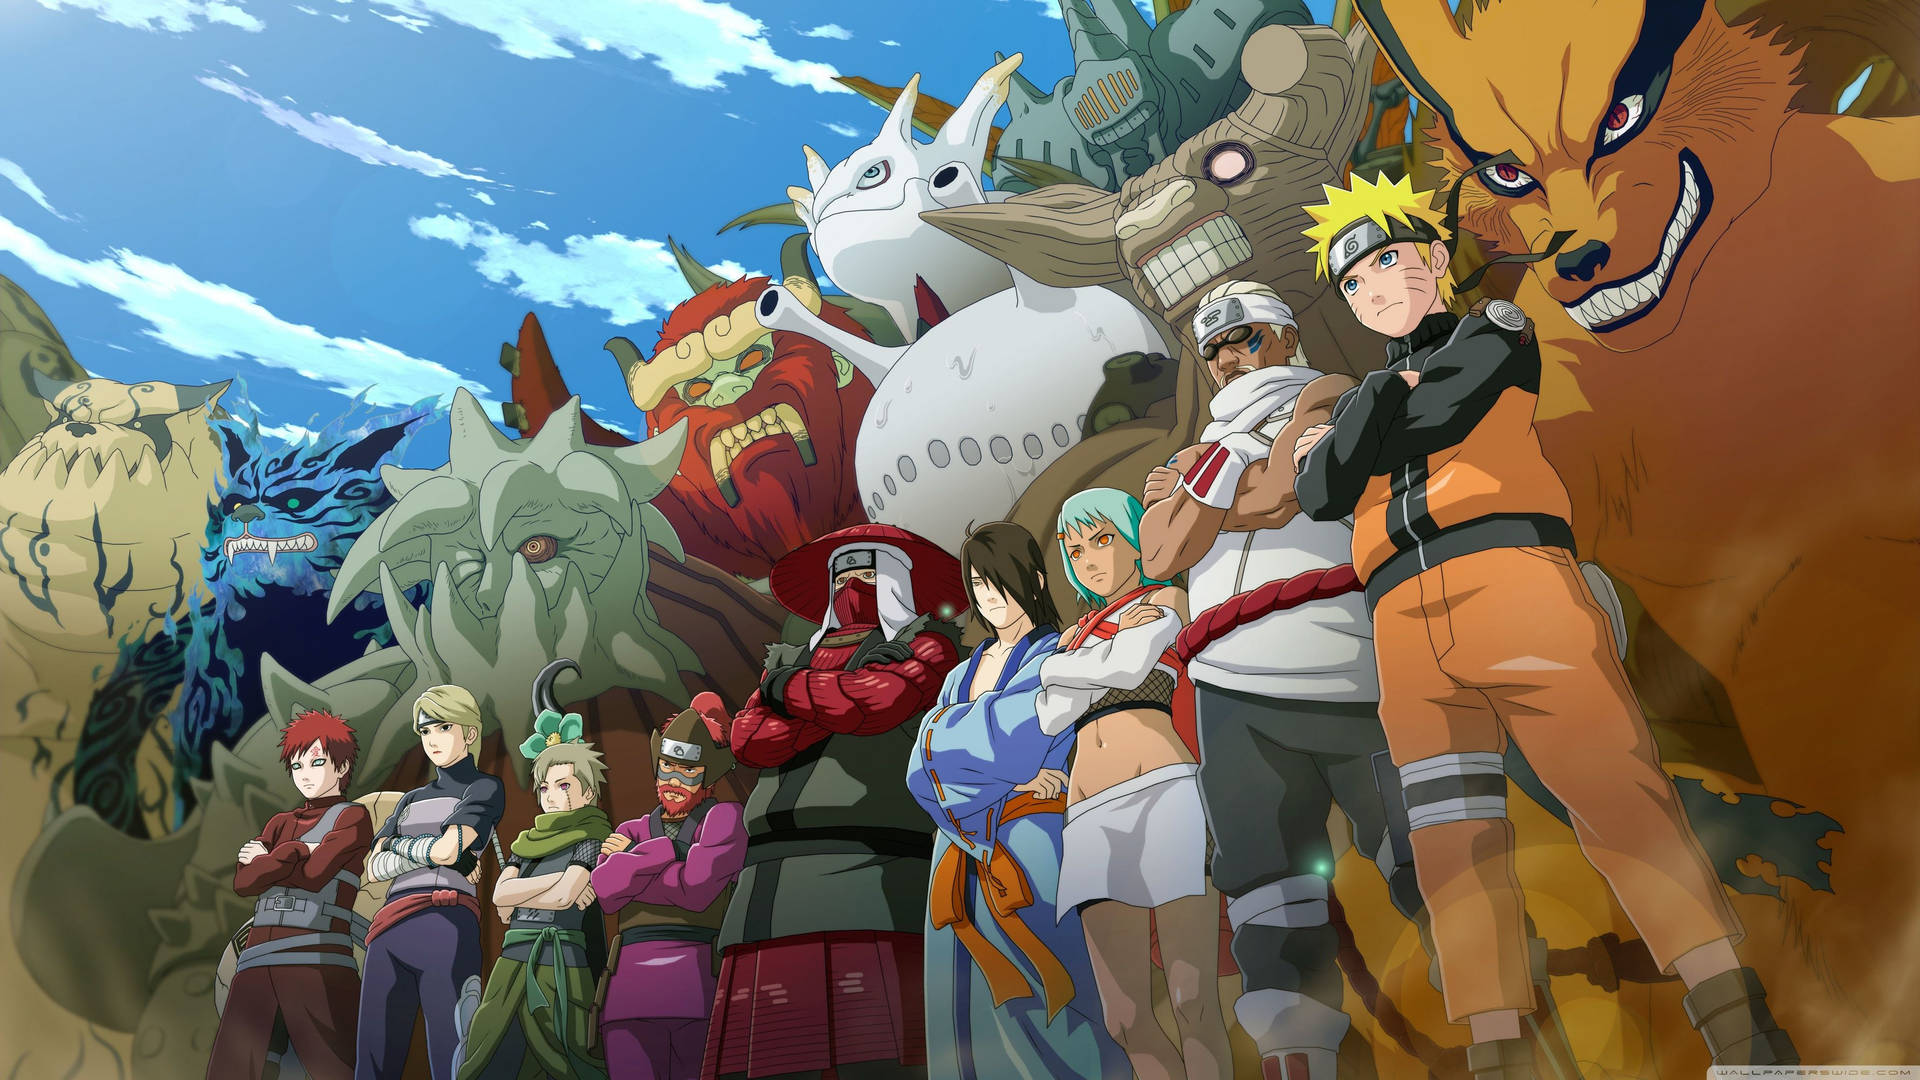 Coolest Naruto Uzumaki Background